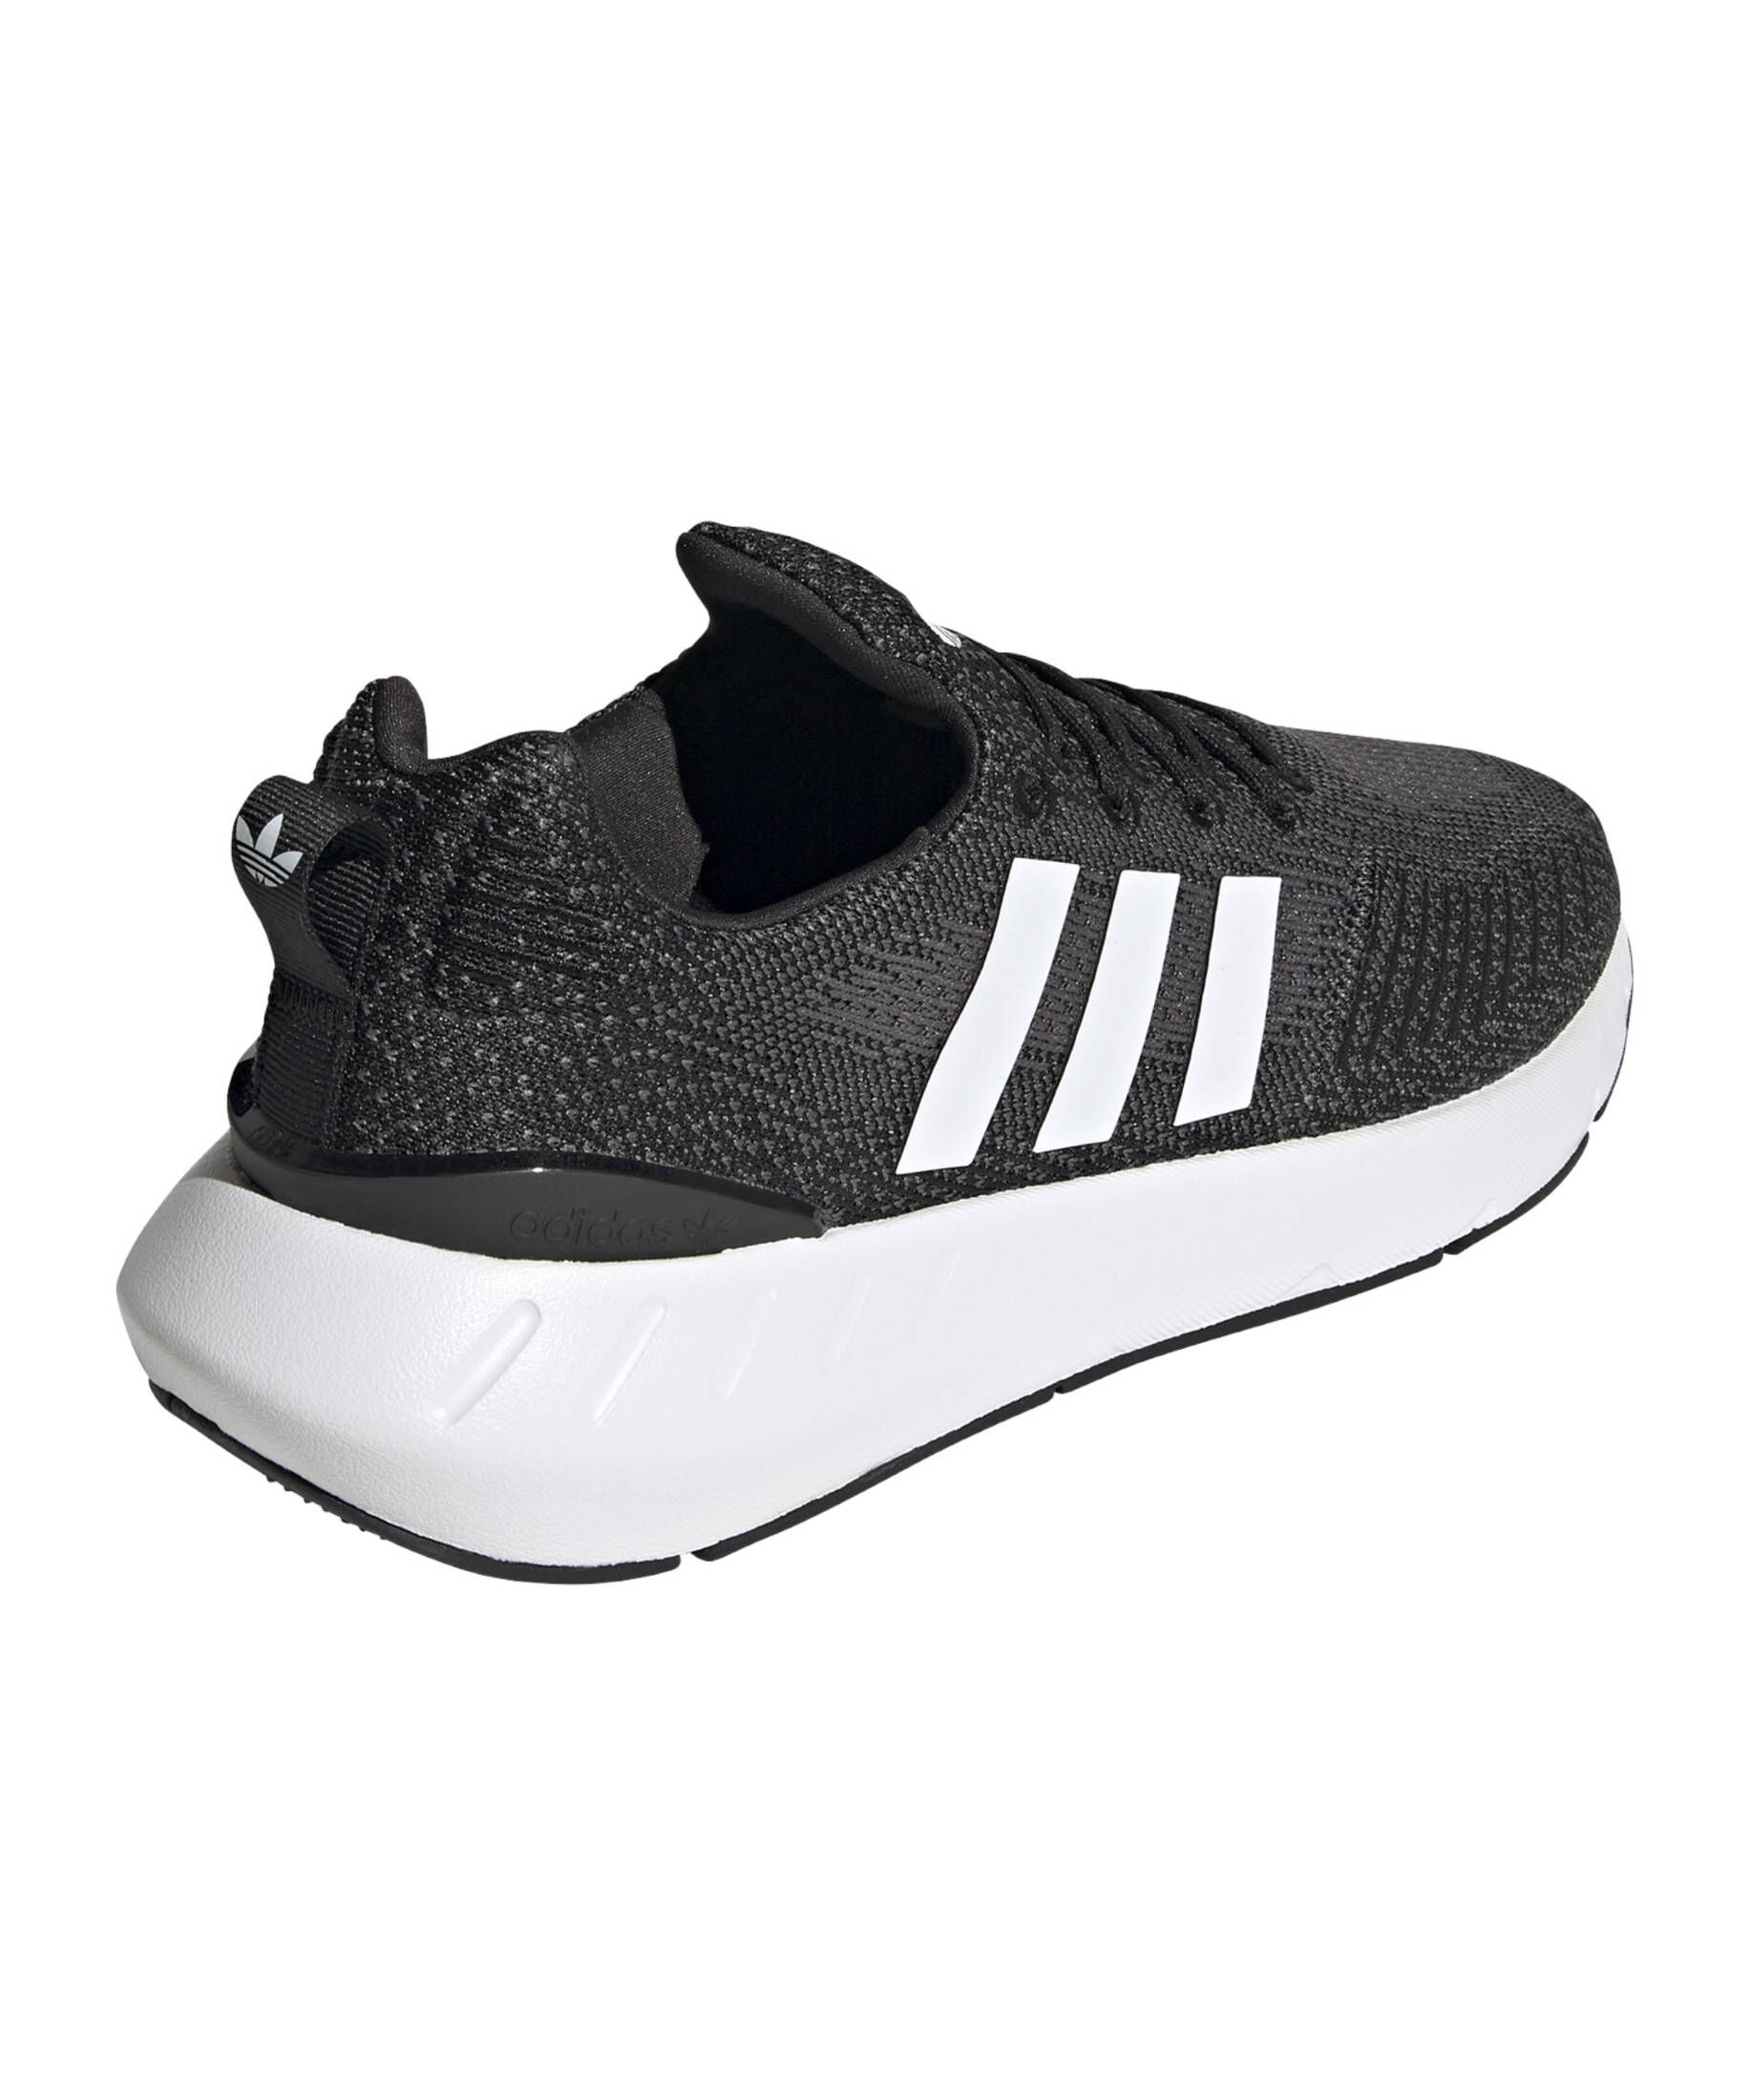 Originals Lifestyle engelhorn - Sneakers Herren Herren Swift 22 Schuhe Run - adidas | kaufen